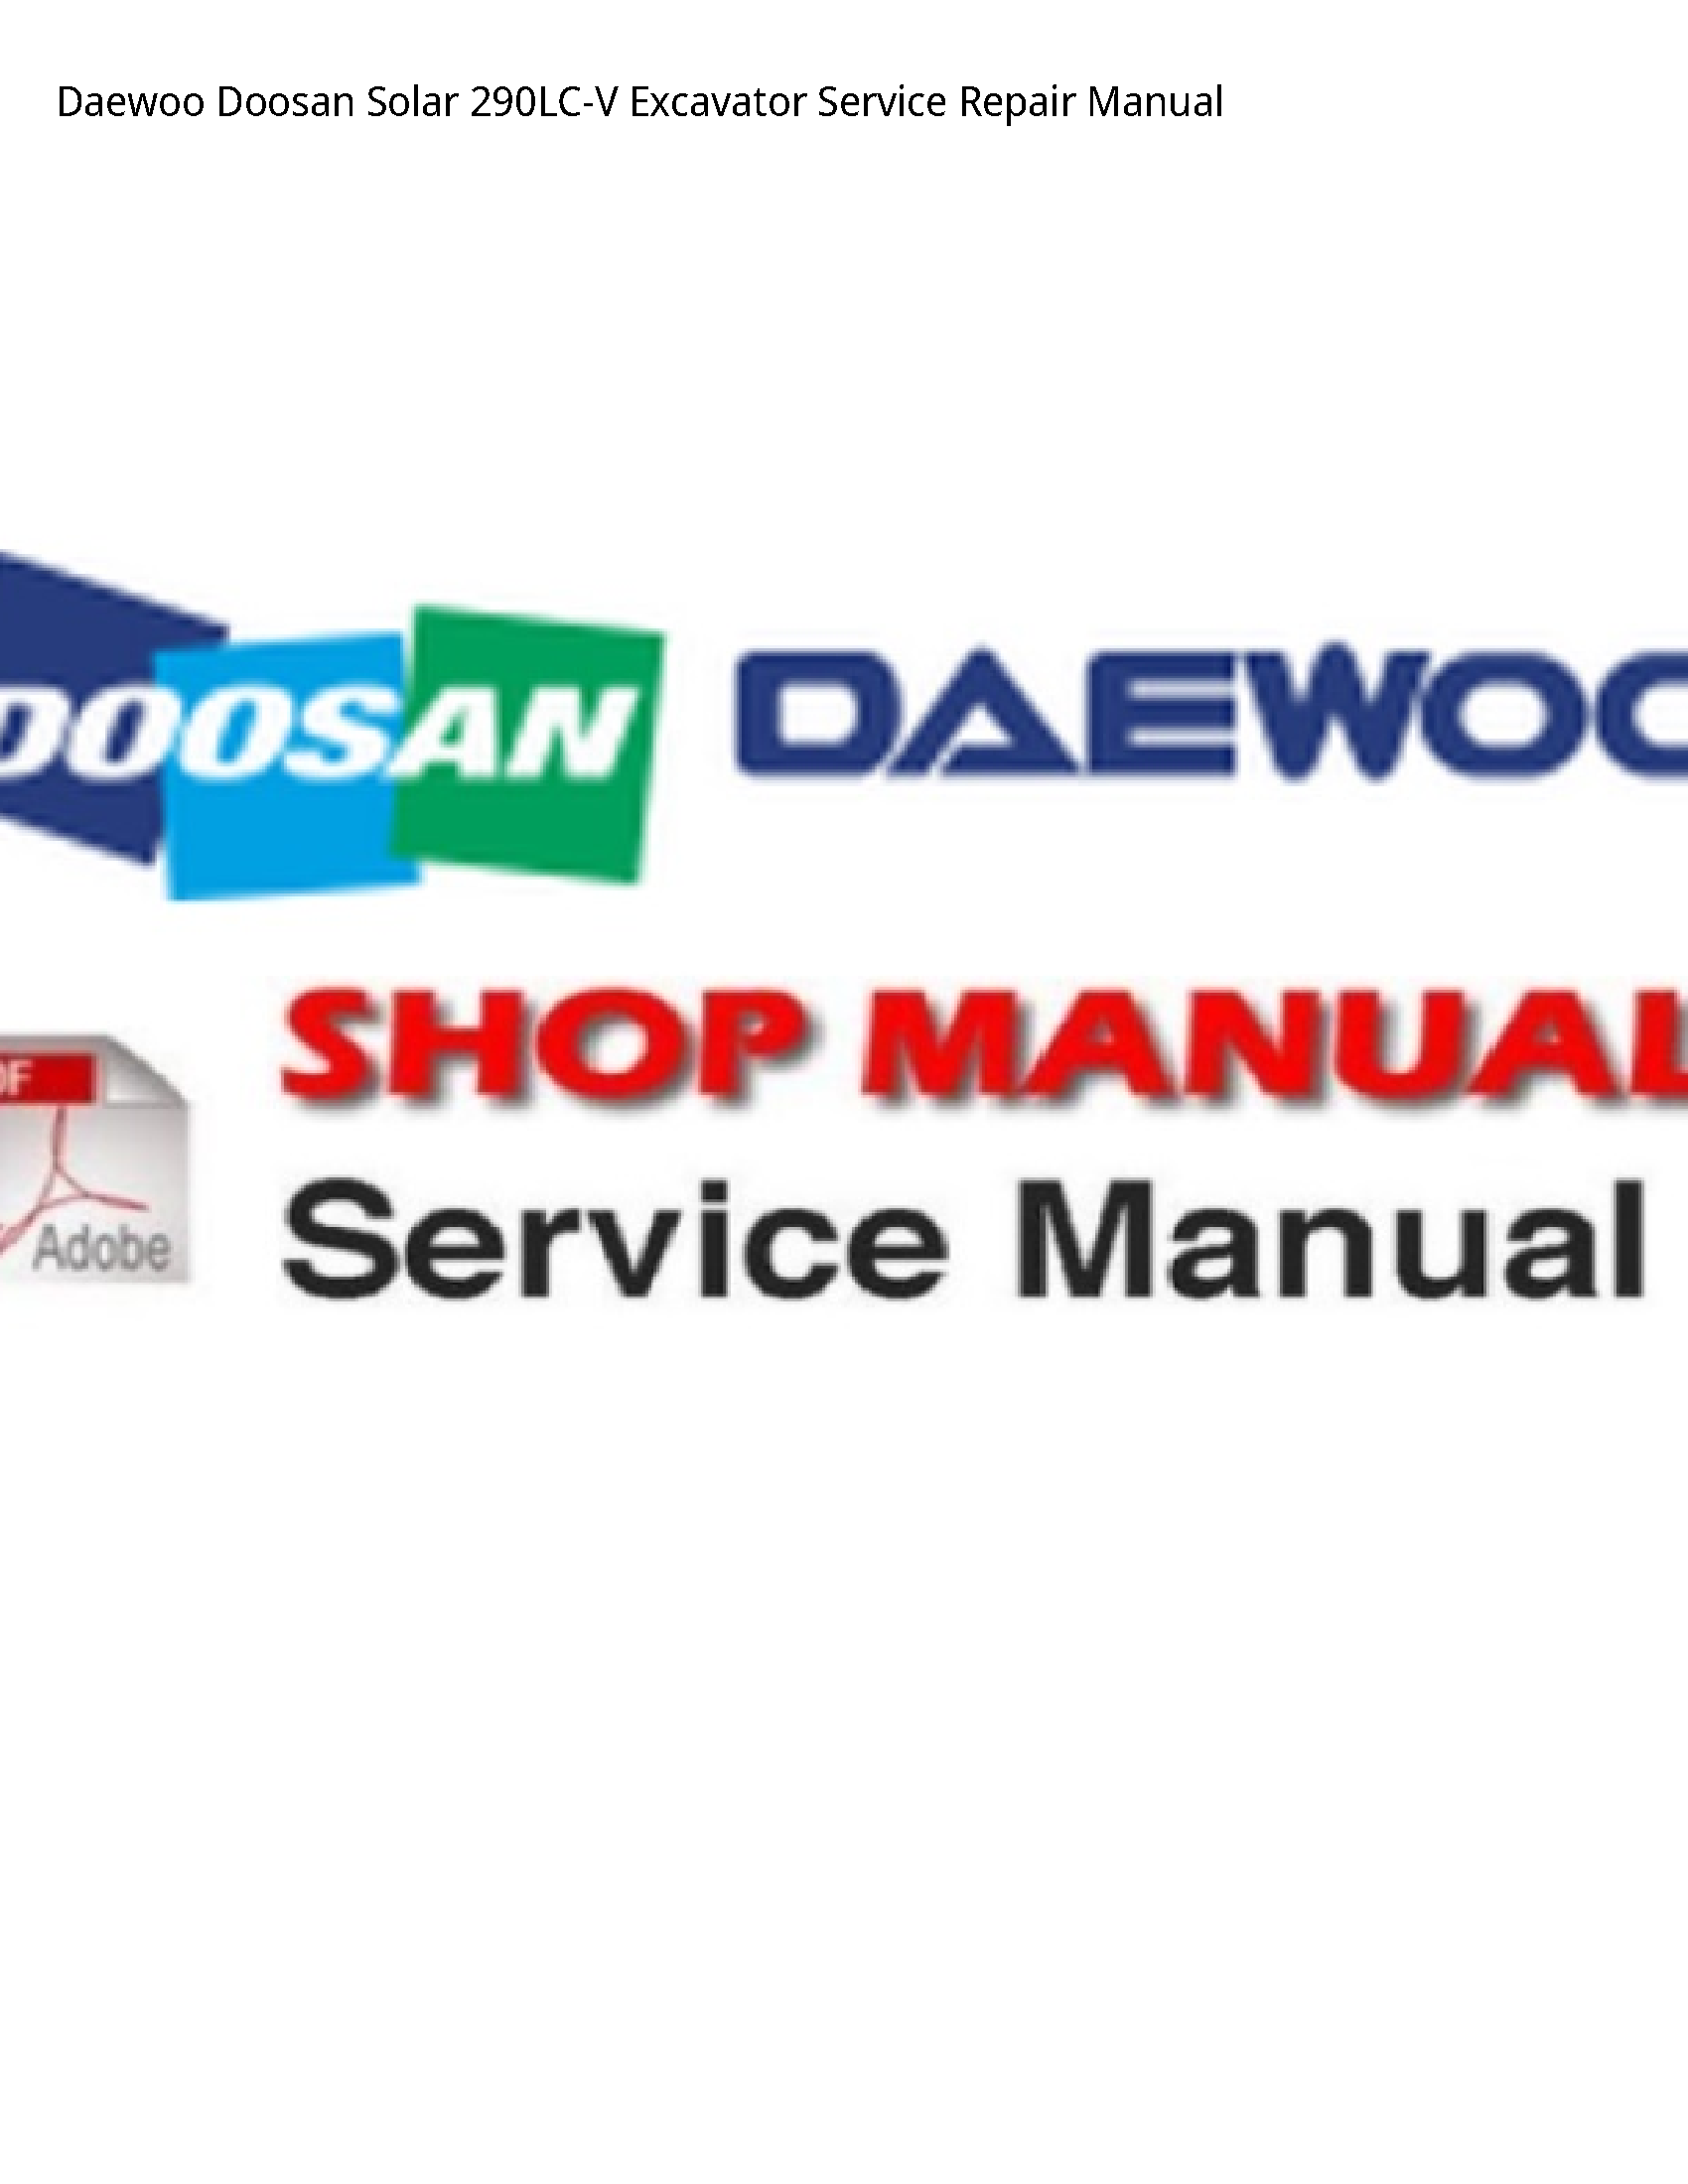 Daewoo Doosan 290LC-V Solar Excavator manual